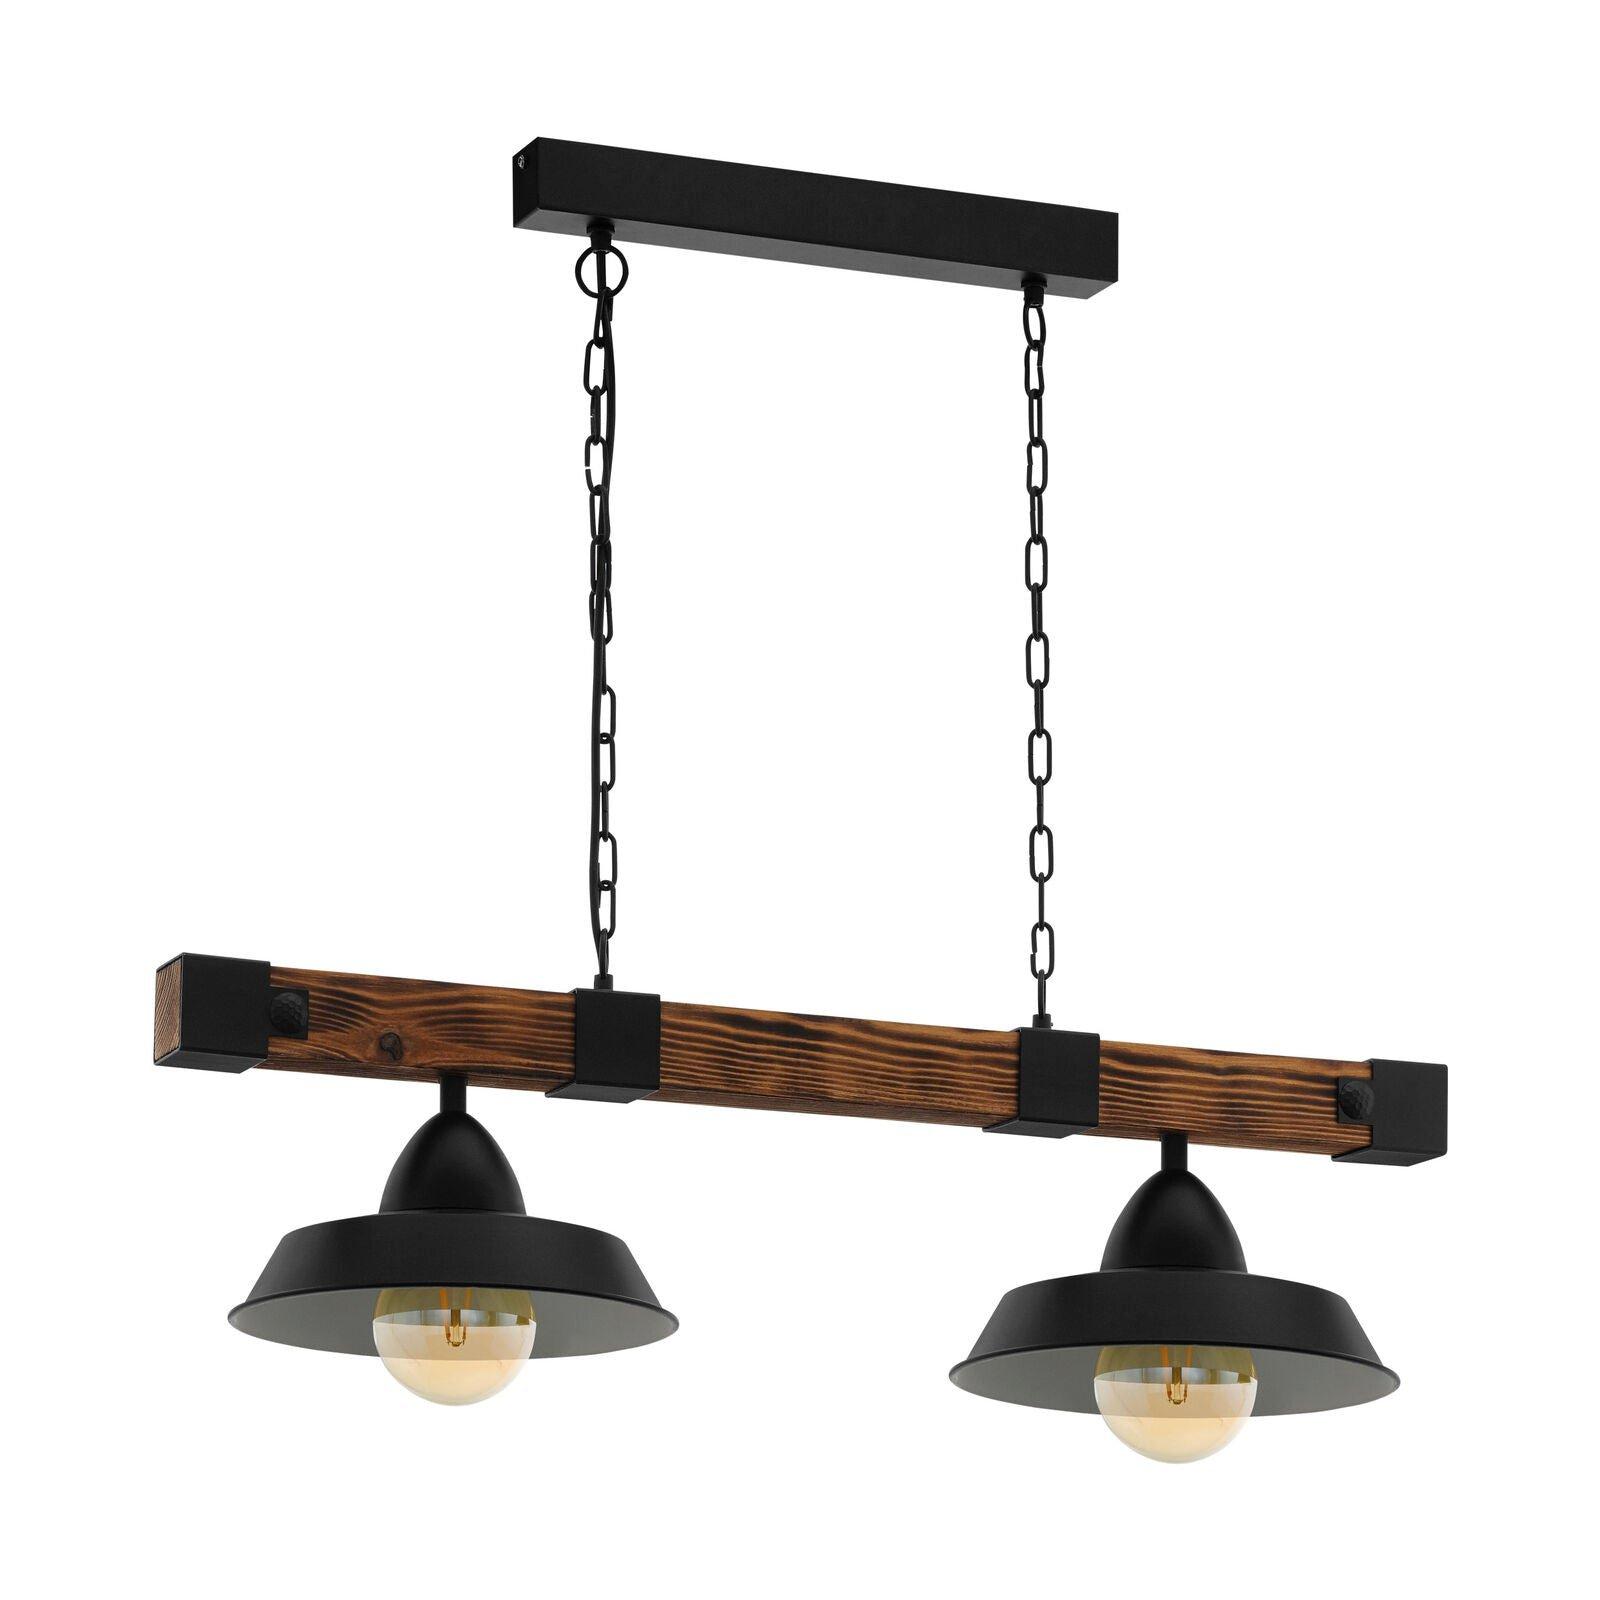 Hanging Ceiling Pendant Light Black & Rustic Wood 2 Bulb Kitchen Island Dining